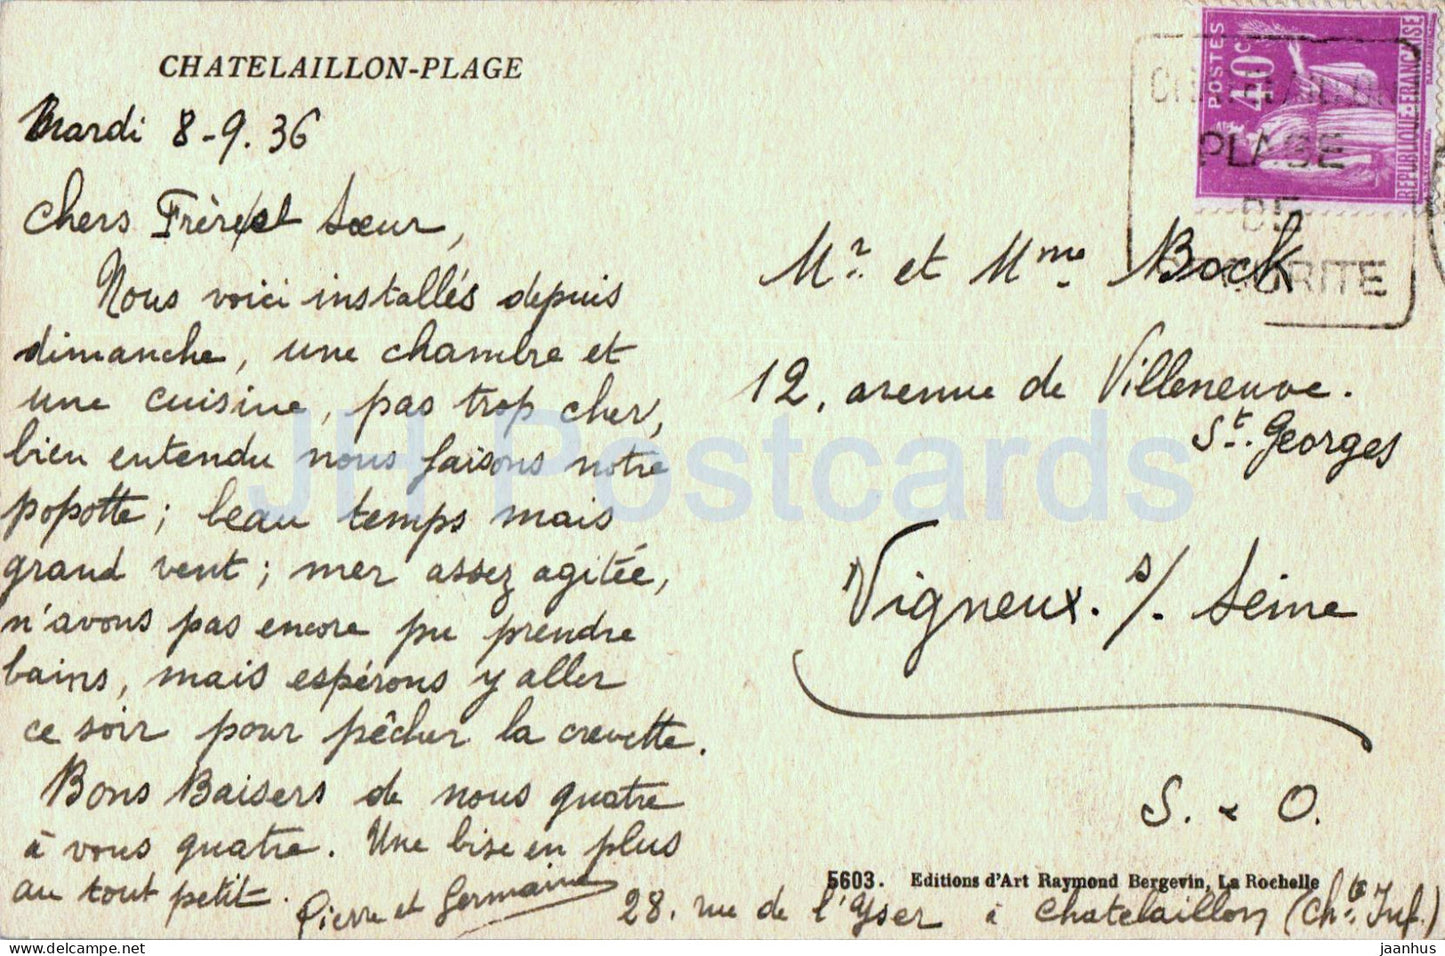 Chatelaillon Plage - Strand - 5603 - alte Postkarte - 1936 - Frankreich - gebraucht 